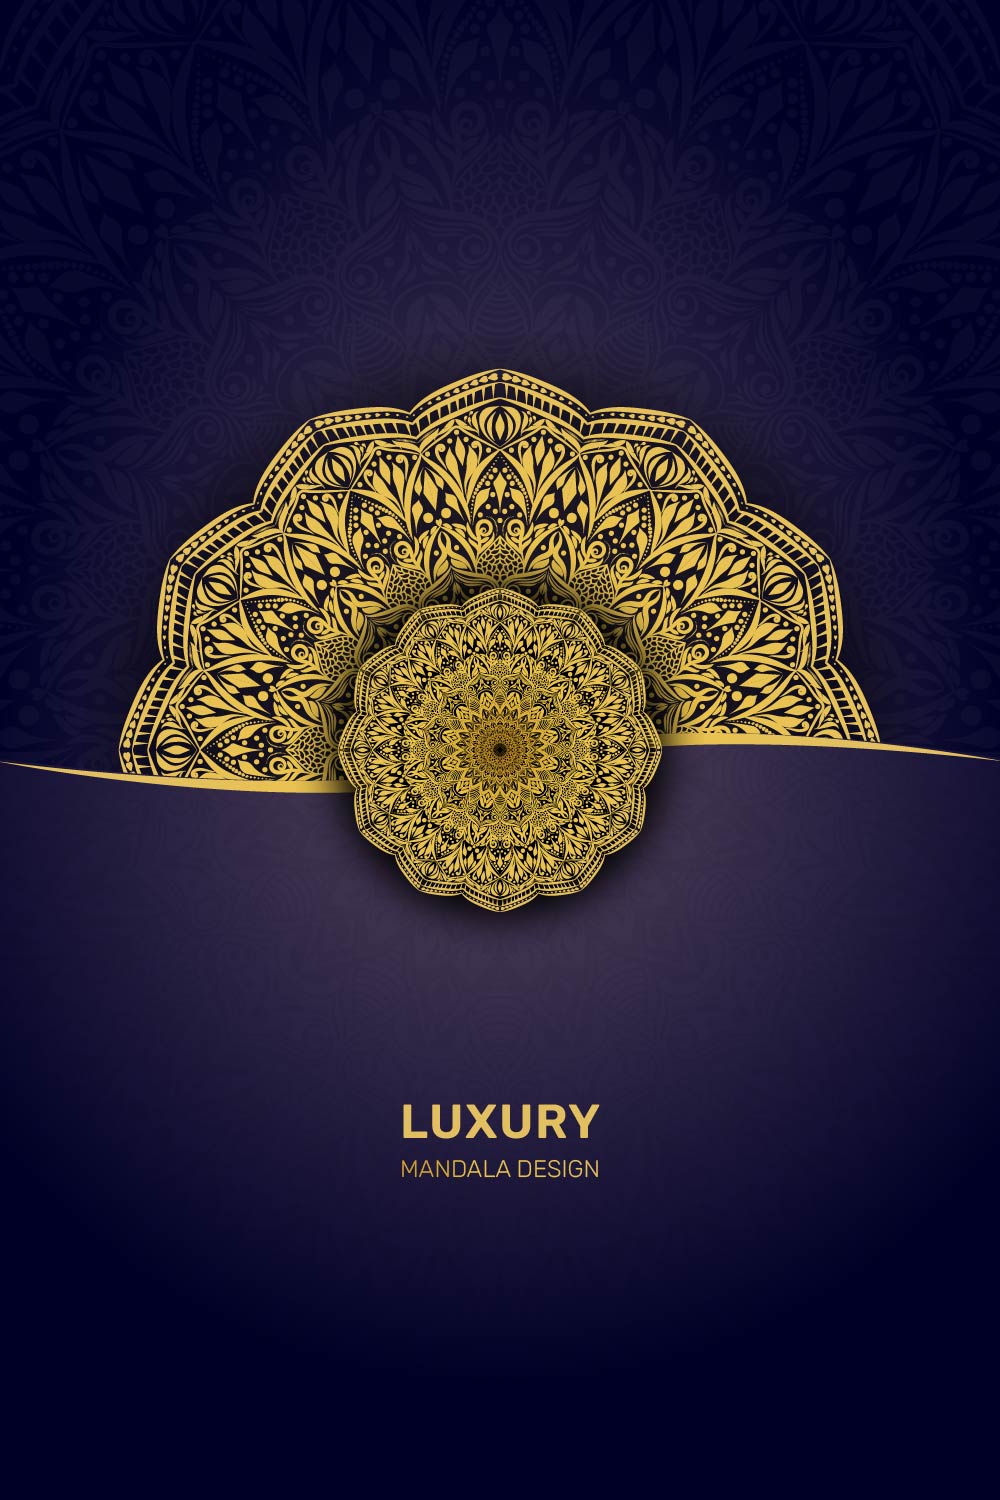 Luxury Mandala design pinterest preview image.